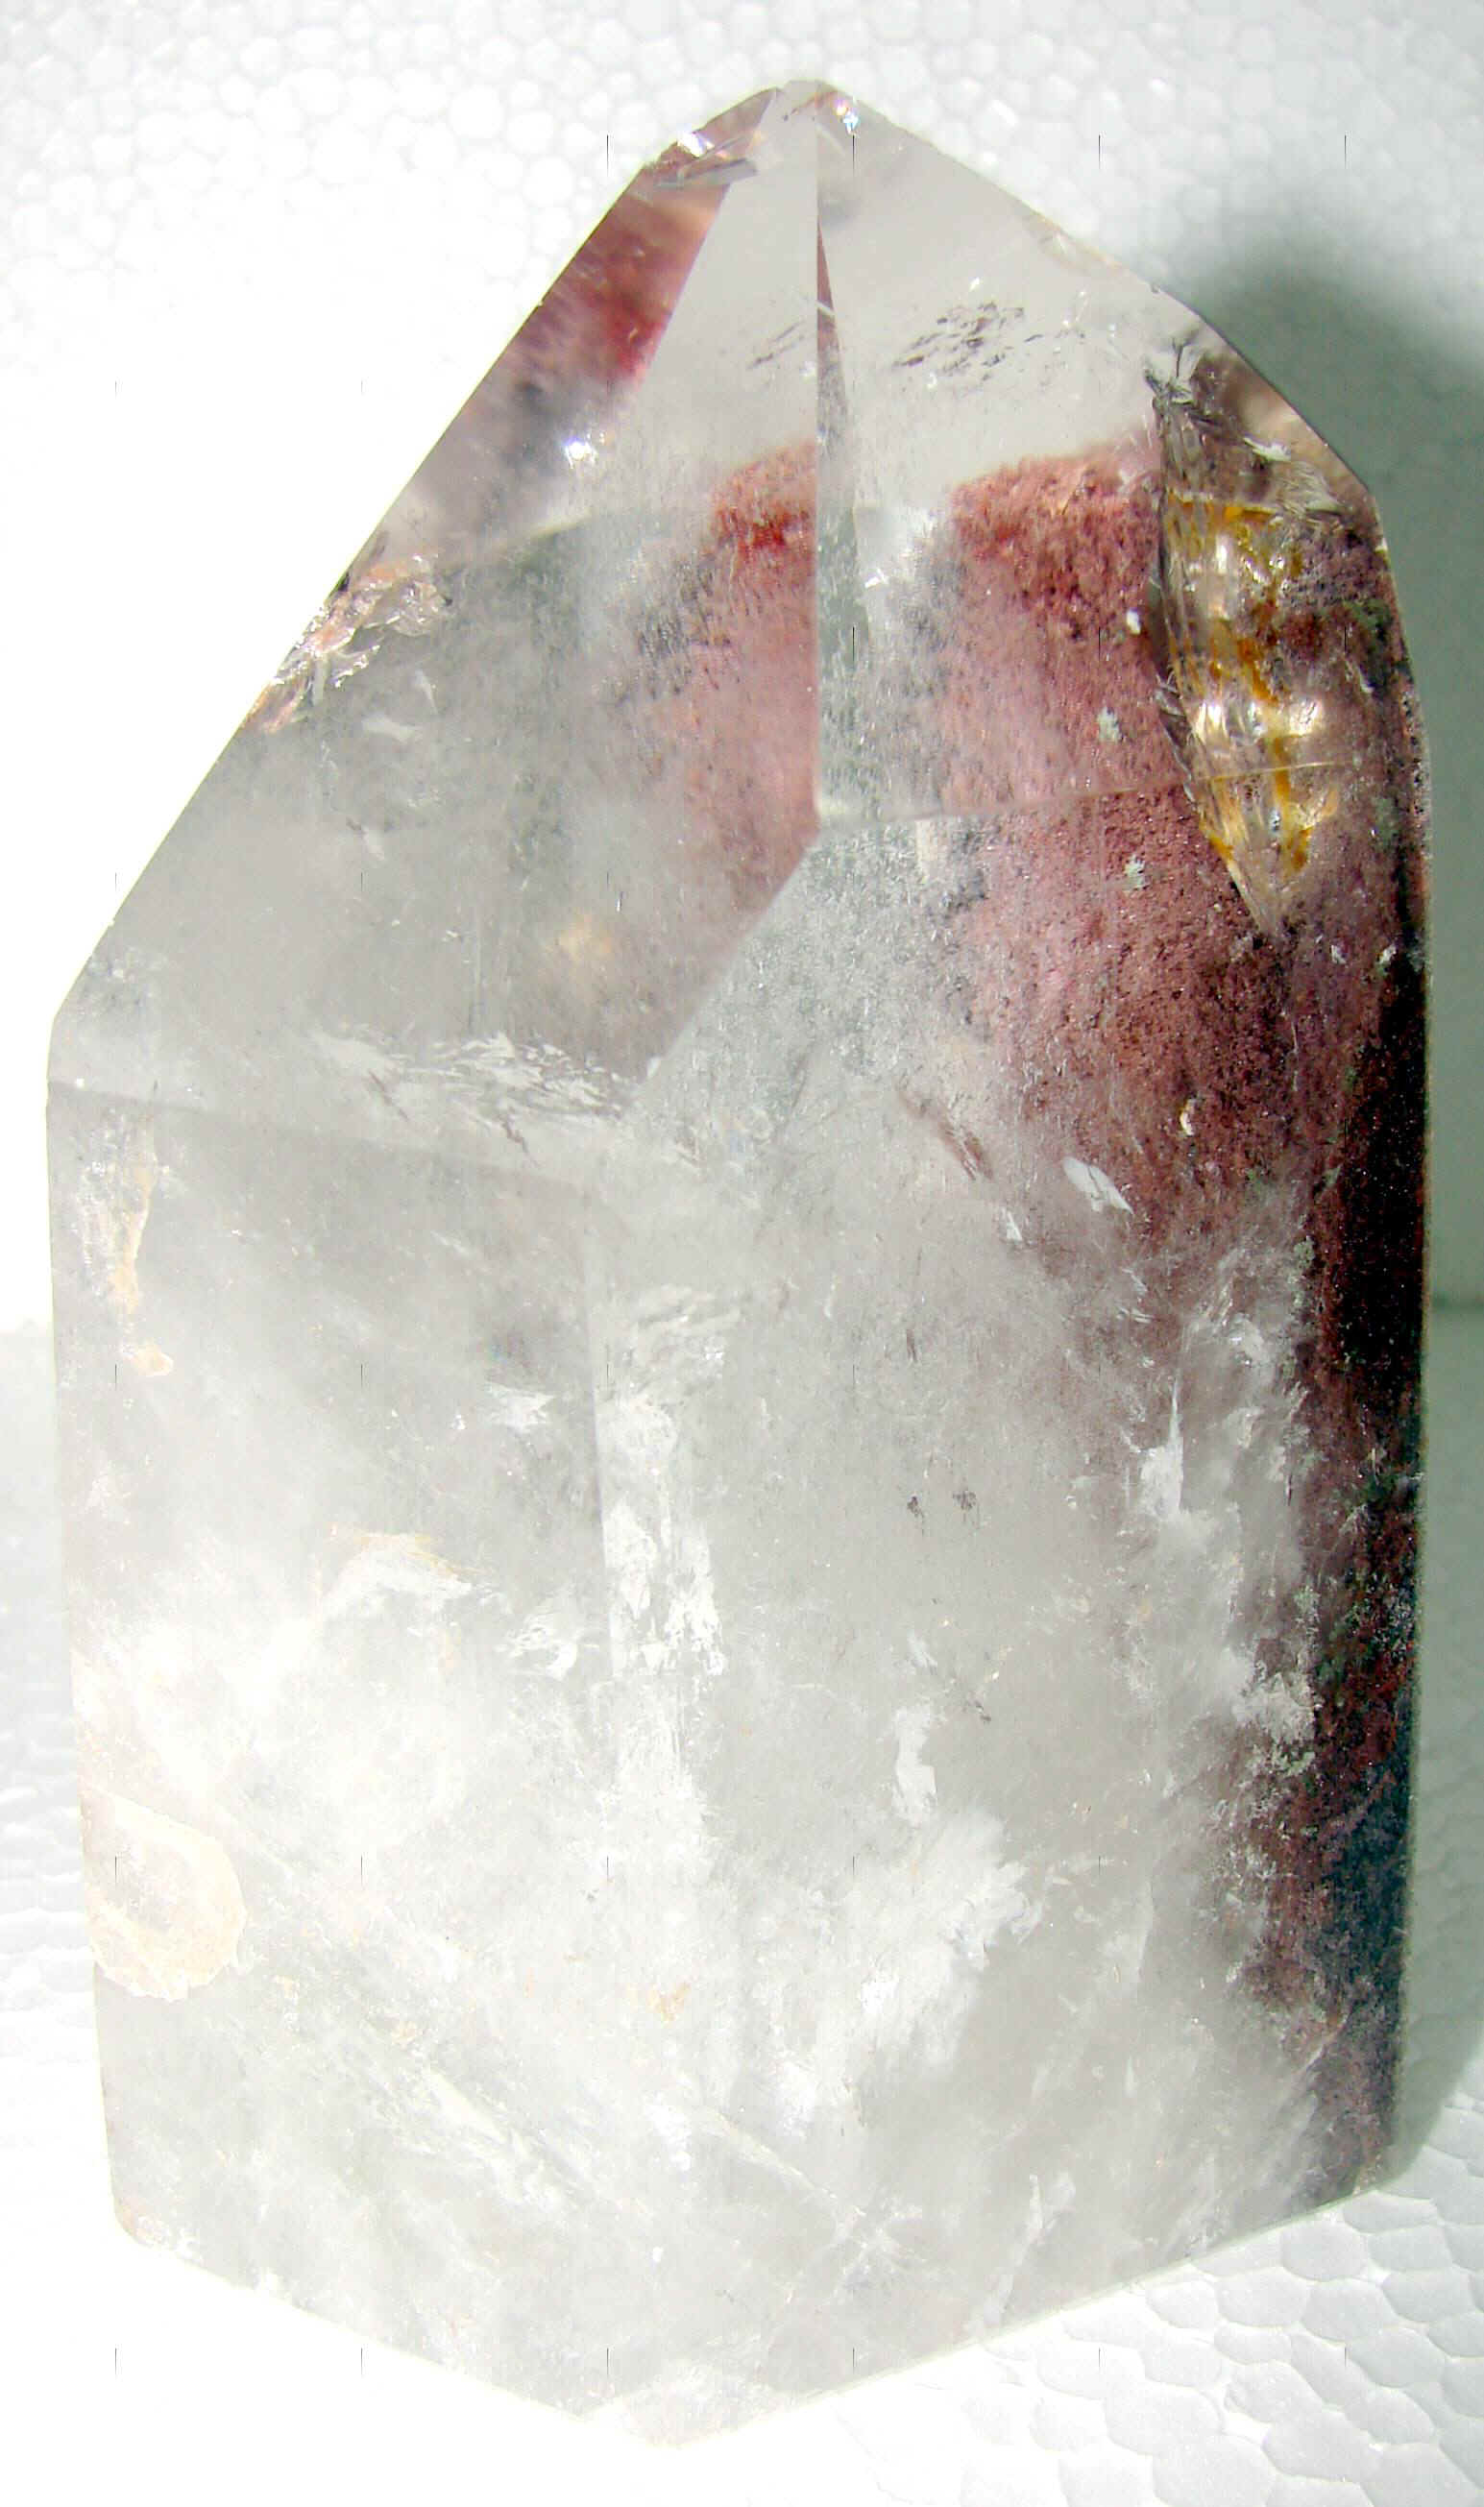 http://www.quartzcrystals.net/nuchl-1.jpg (807370 bytes)